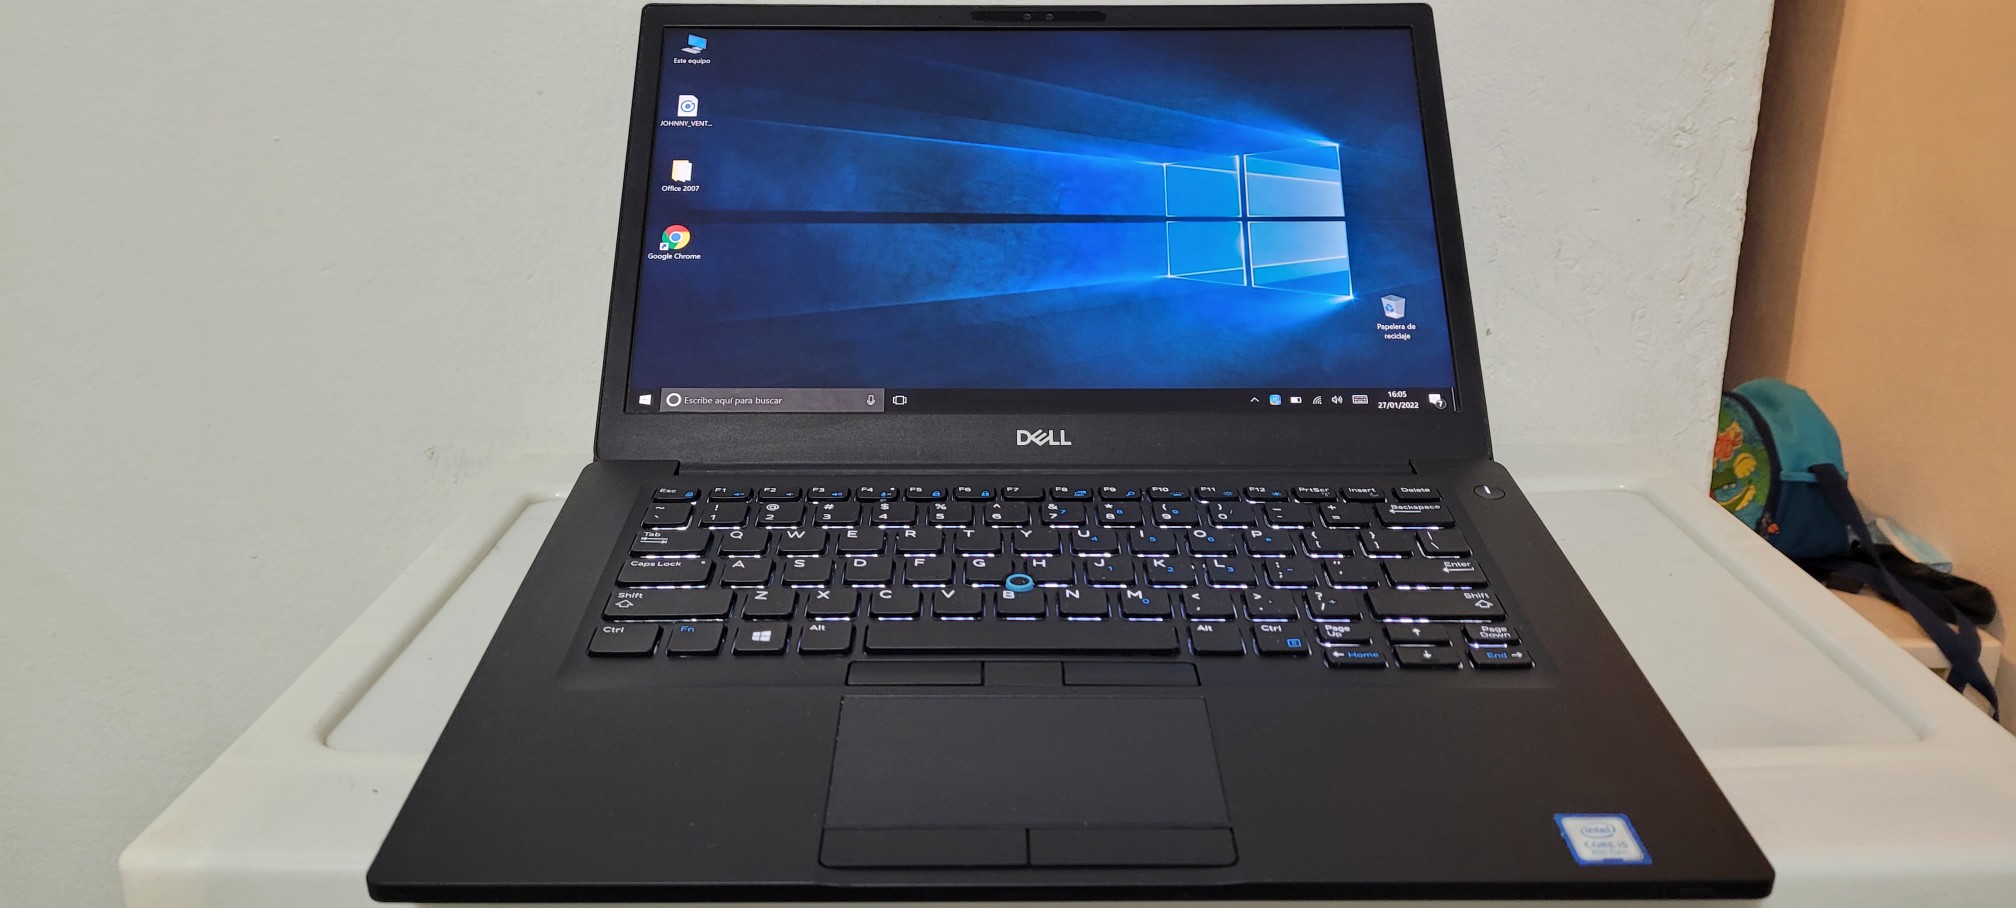 computadoras y laptops - Laptop Dell Slim 14 Pulg Core i7 6ta Ram 8gb ddr4 Disco 256gb SSD Full 1080p 0